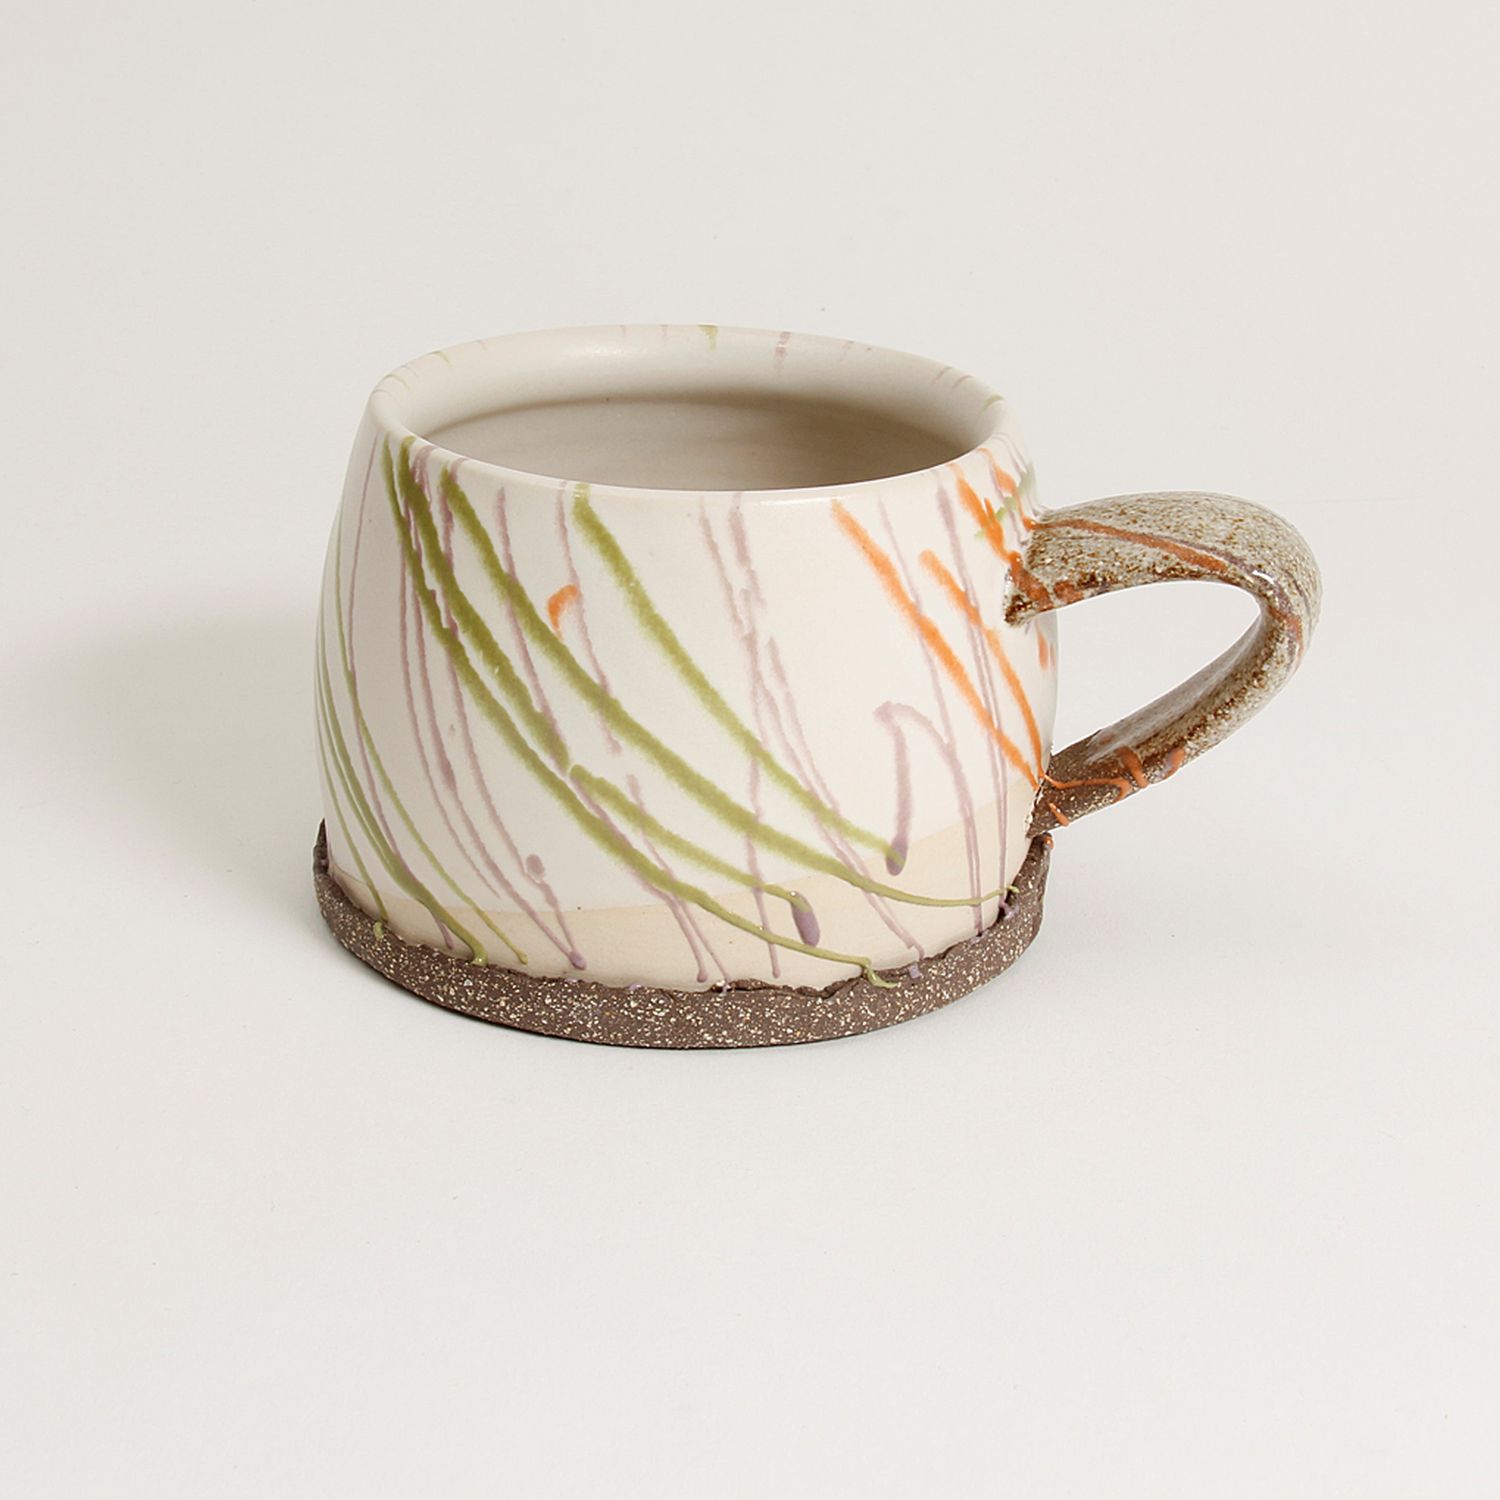 Gracia Isabel Gomez: “Tealicious” White Chocolate Mug with Colours Product Image 1 of 7